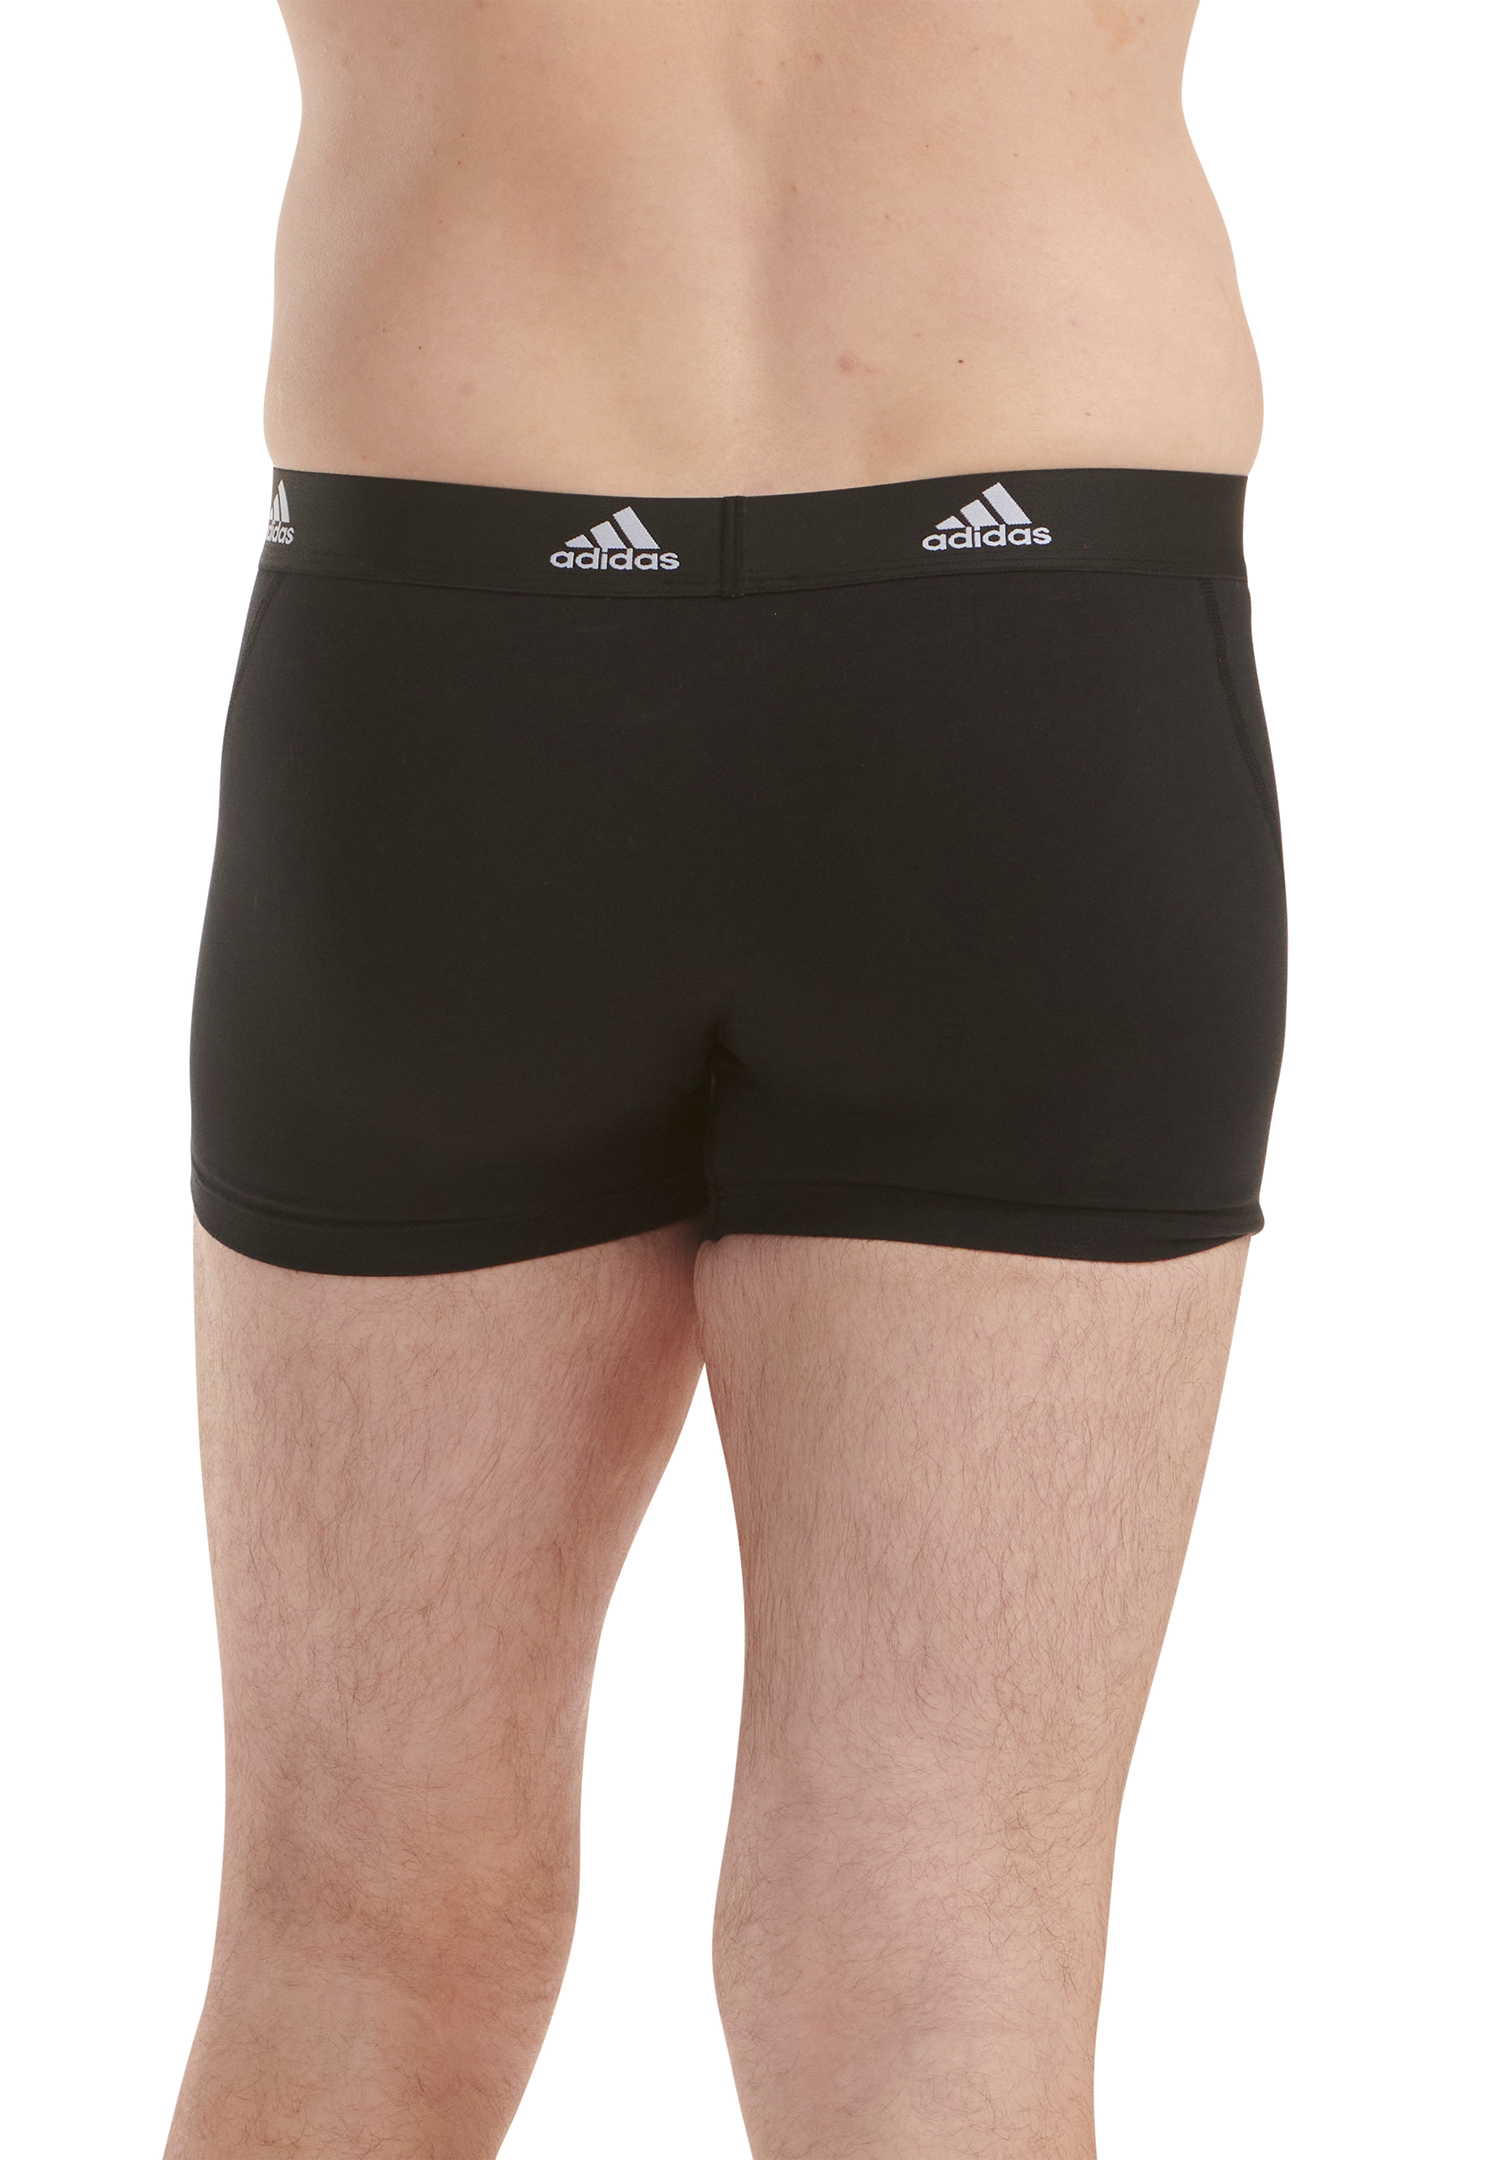 9er PACK Adidas Basic Trunk Men Herren Unterhose Shorts Unterwäsche 9er Pack 